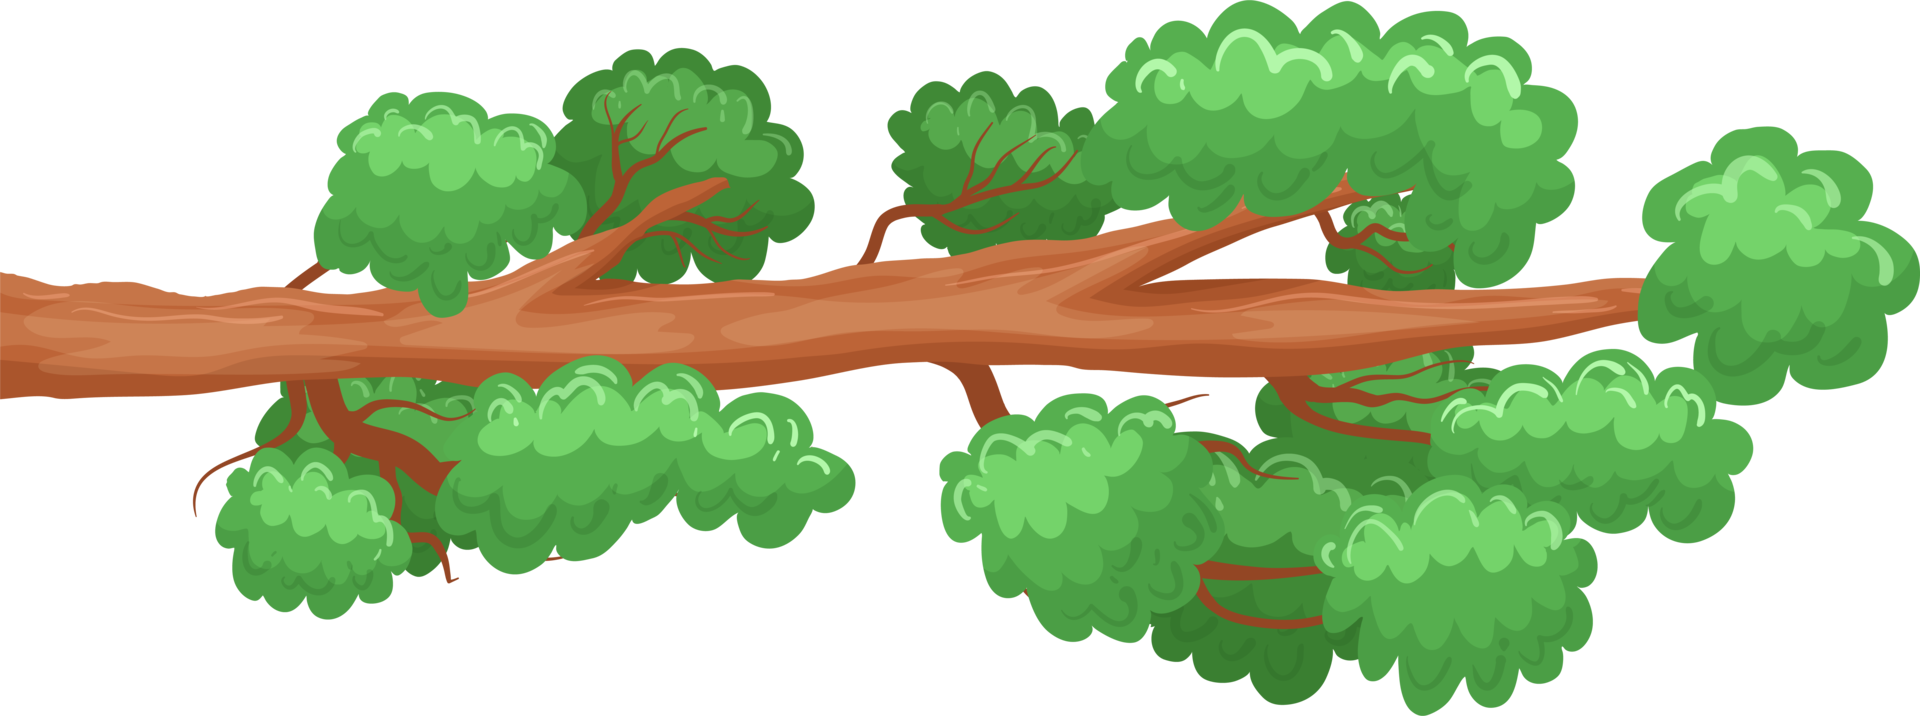 Tree branch clipart design illustration png